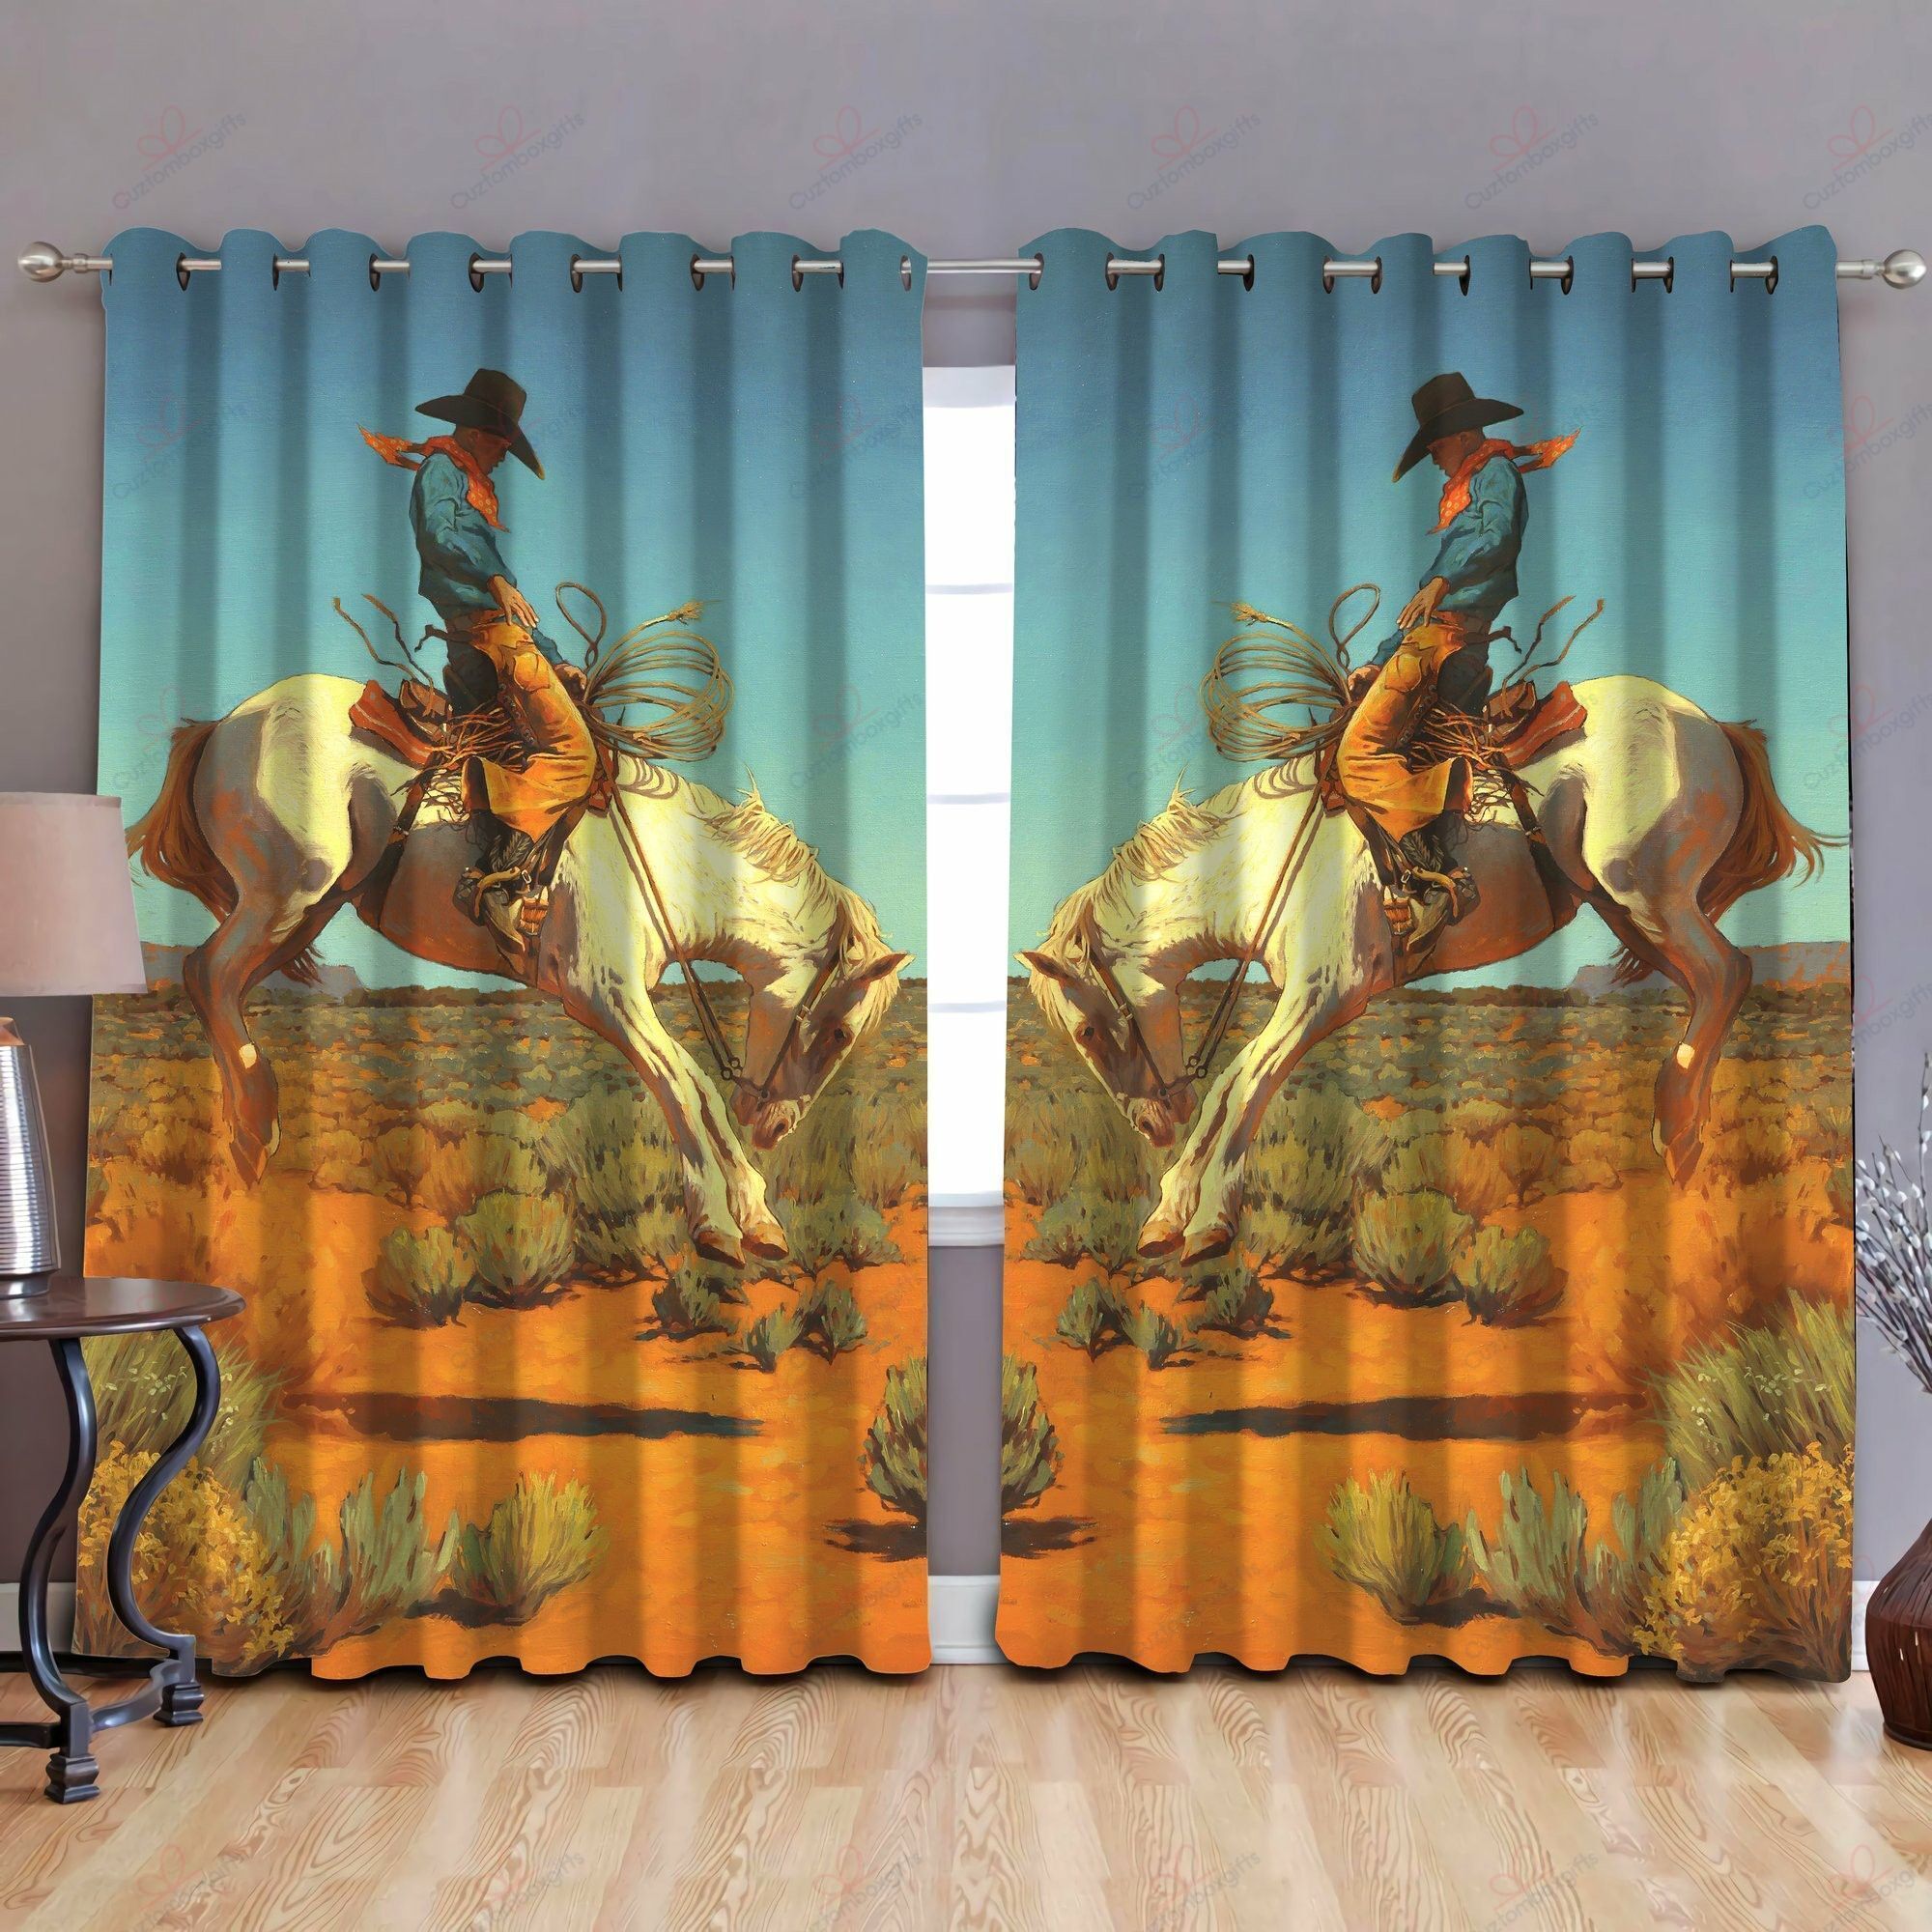 cowboy style printed window curtain home decor 1831